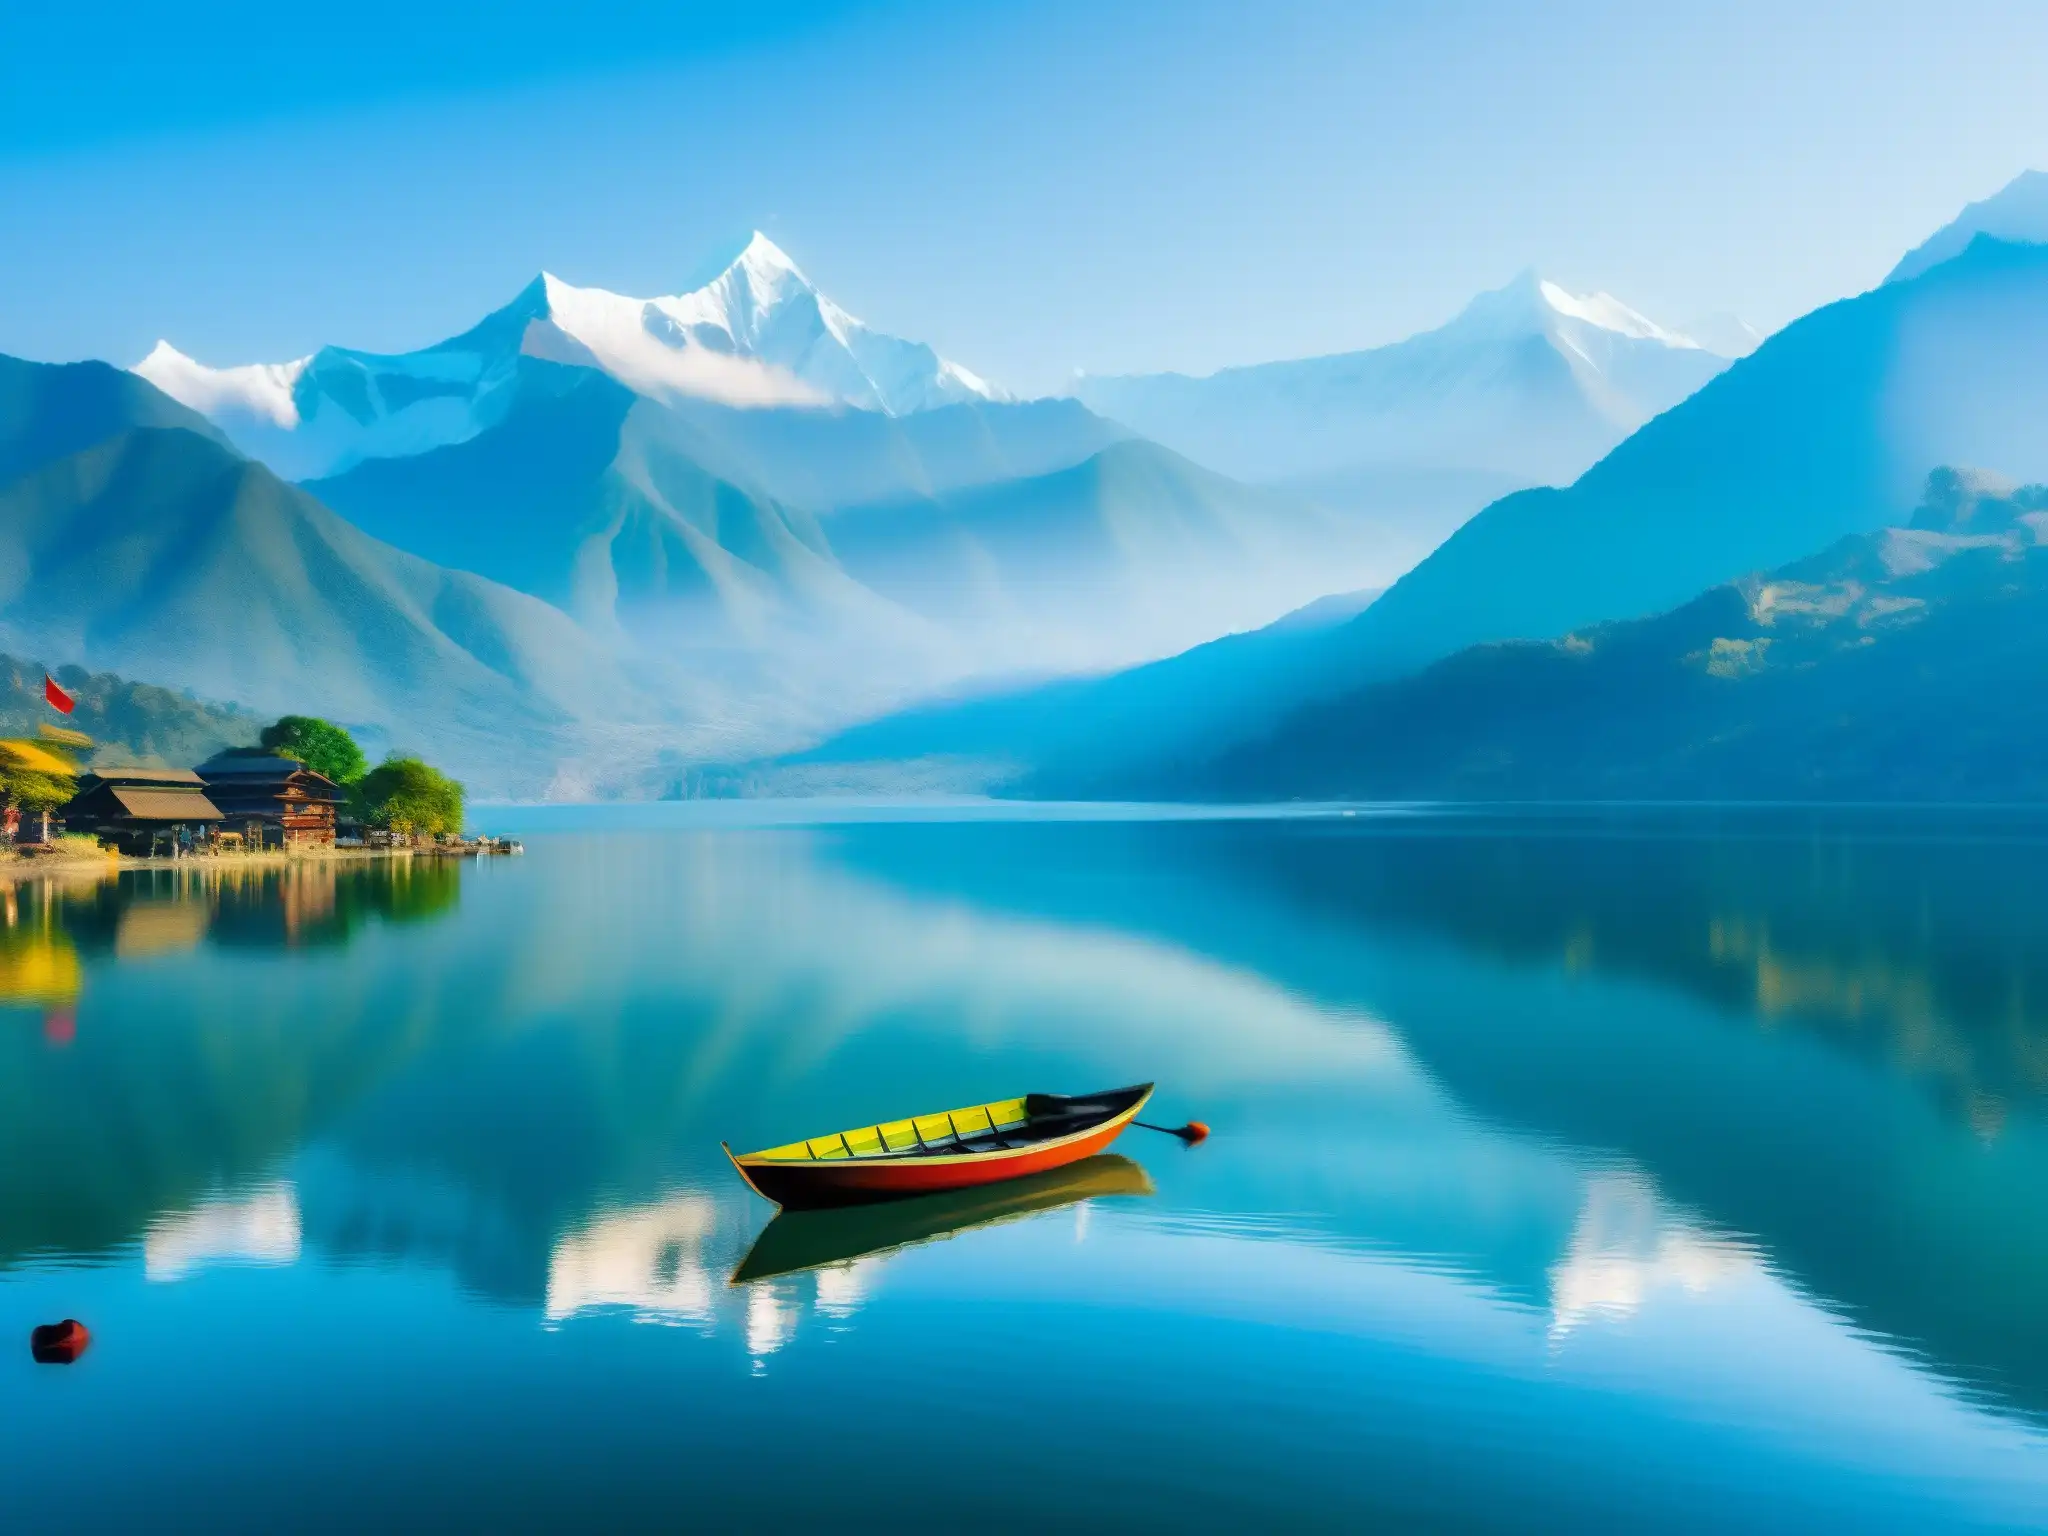 La majestuosa cordillera del Annapurna se refleja en el tranquilo lago Phewa, escenario de la vibrante leyenda Dama del Lago Nepal